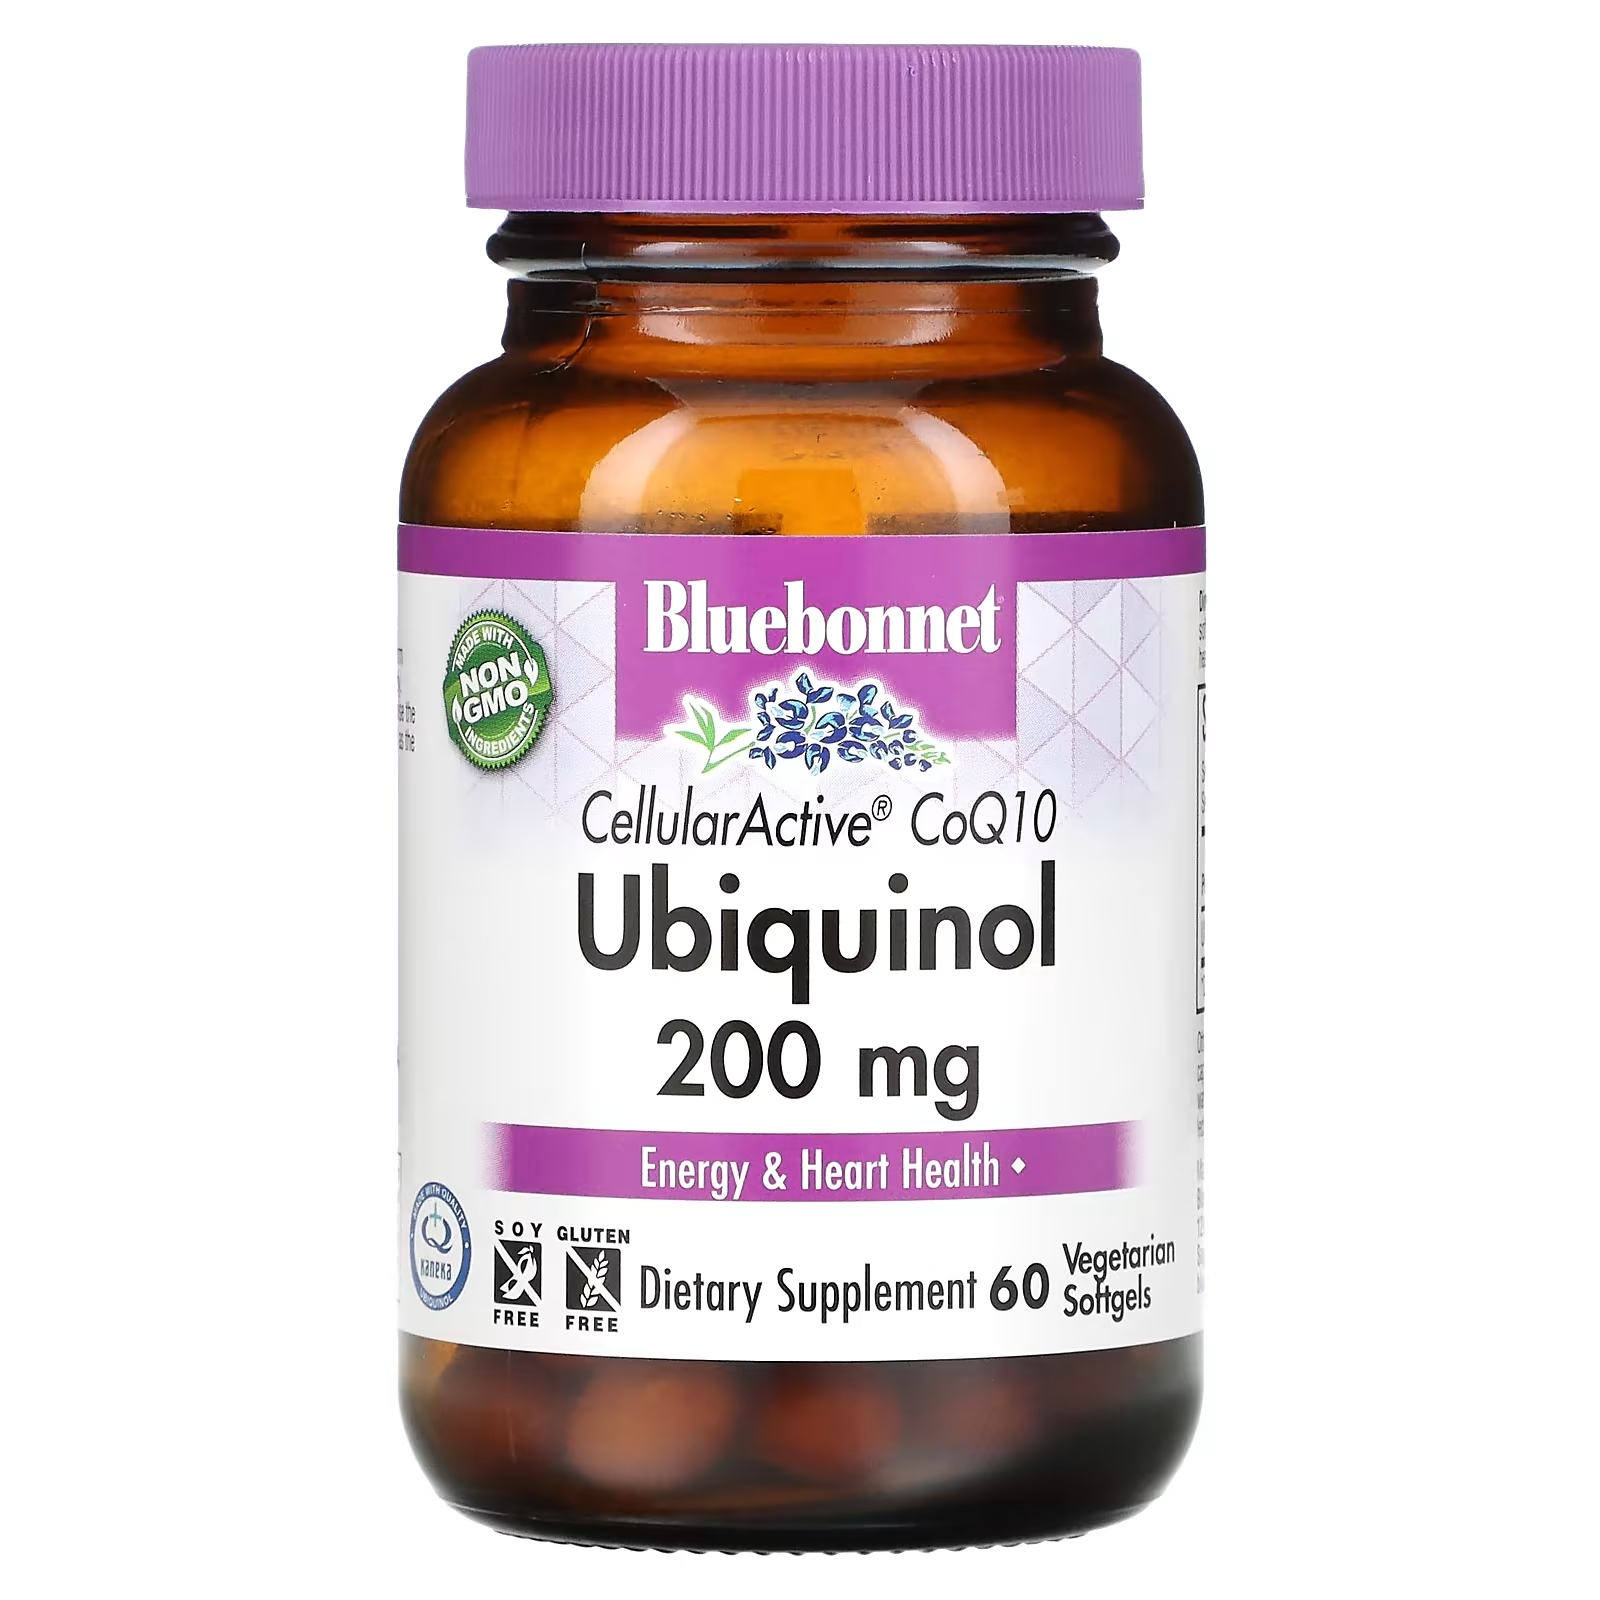 Bluebonnet Nutrition Убихинол CellullarActive CoQ10 200 мг, 60 растительных капсул coq10 убихинол cellularactive 50 мг 60 капсул bluebonnet nutrition